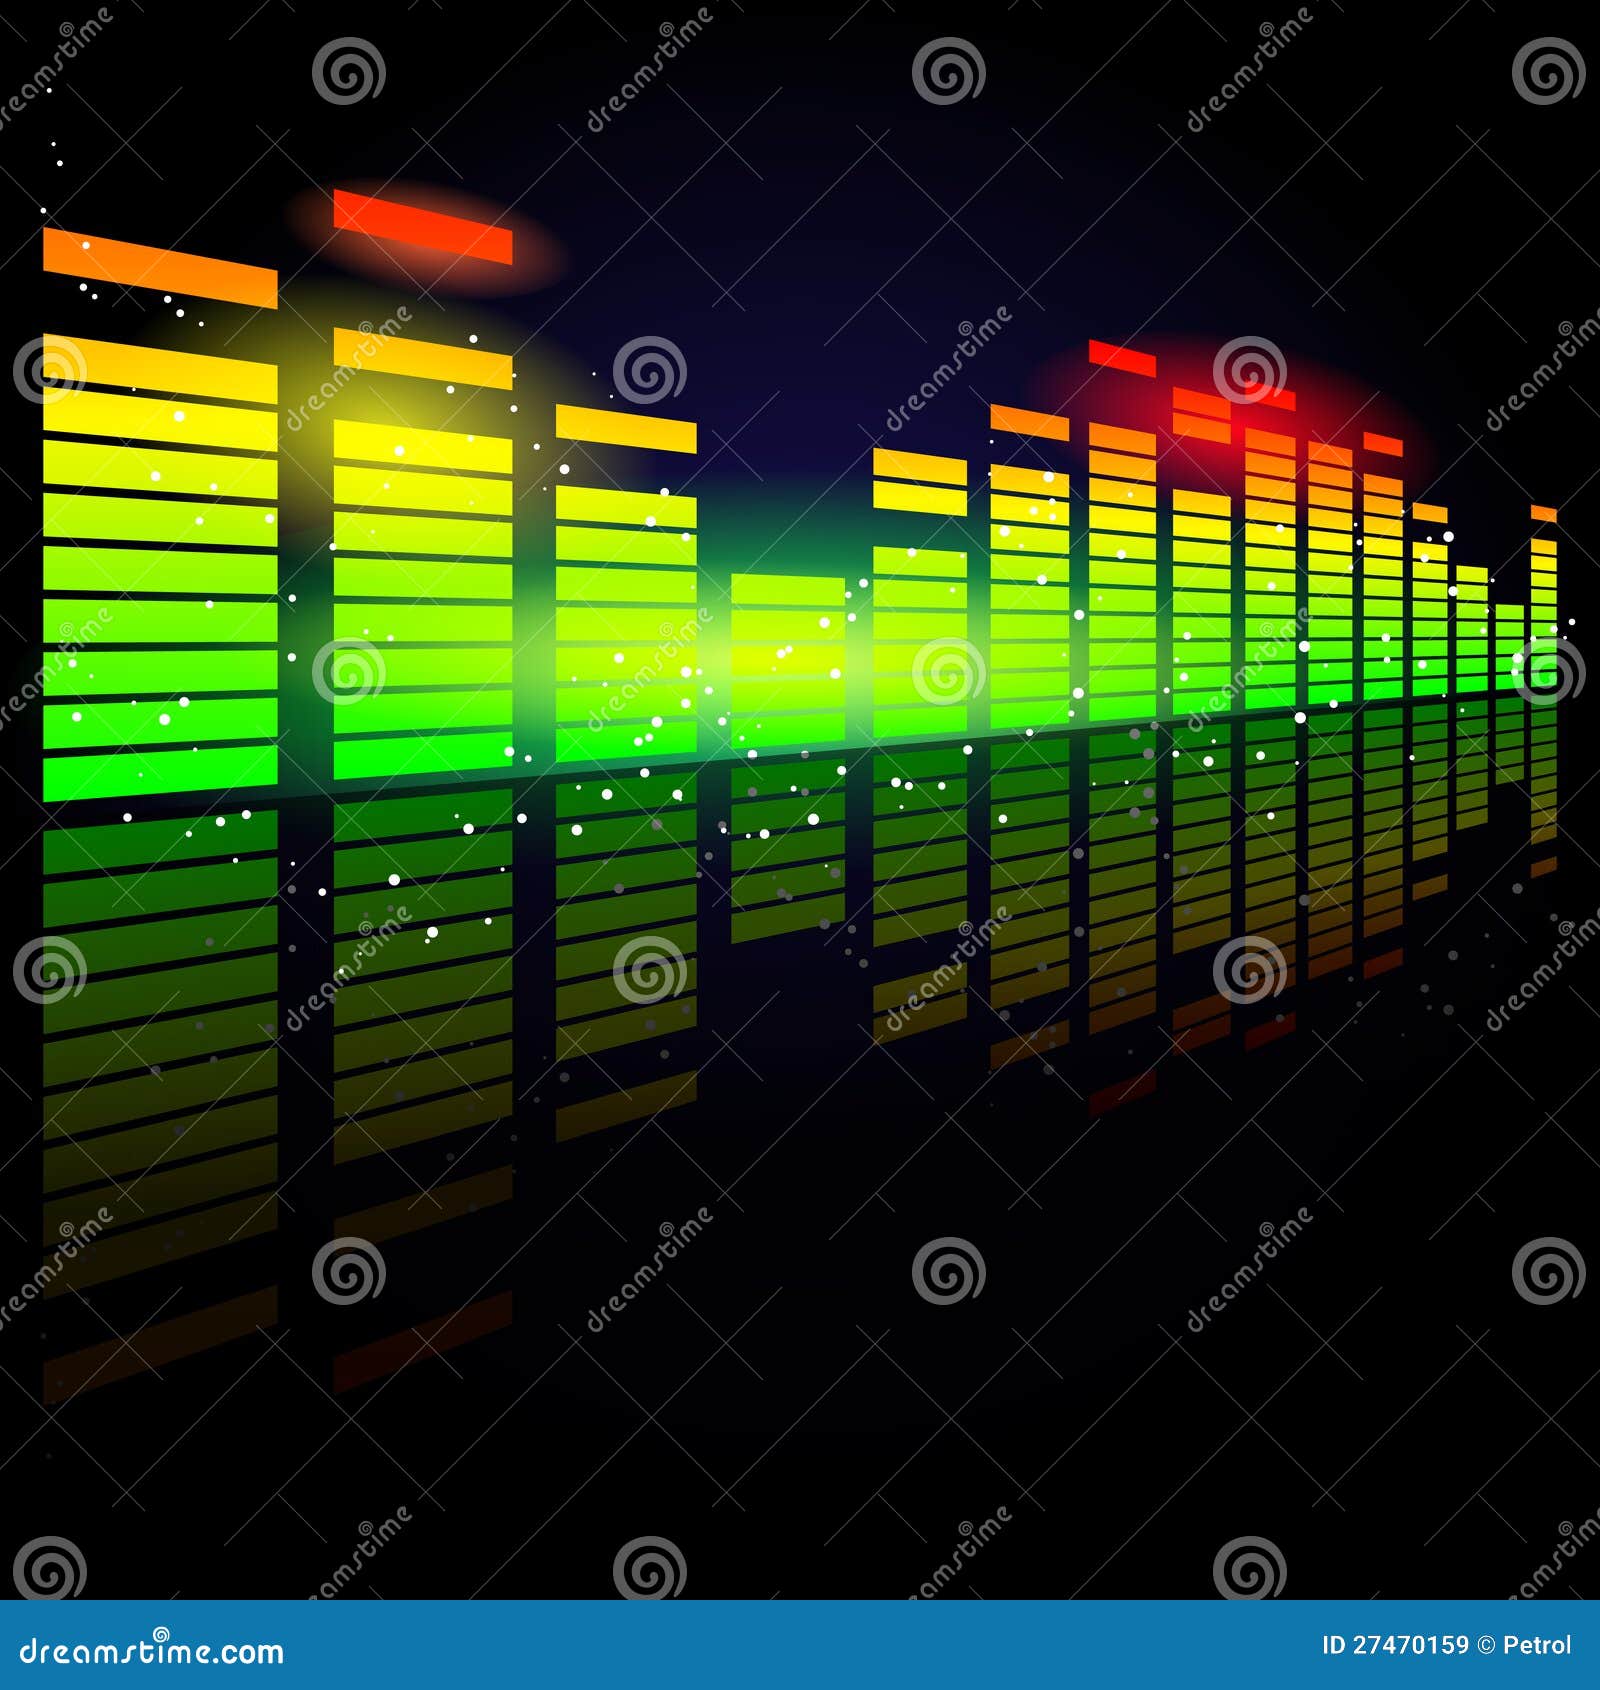 Digital equalizer stock vector. Illustration of listening - 27470159